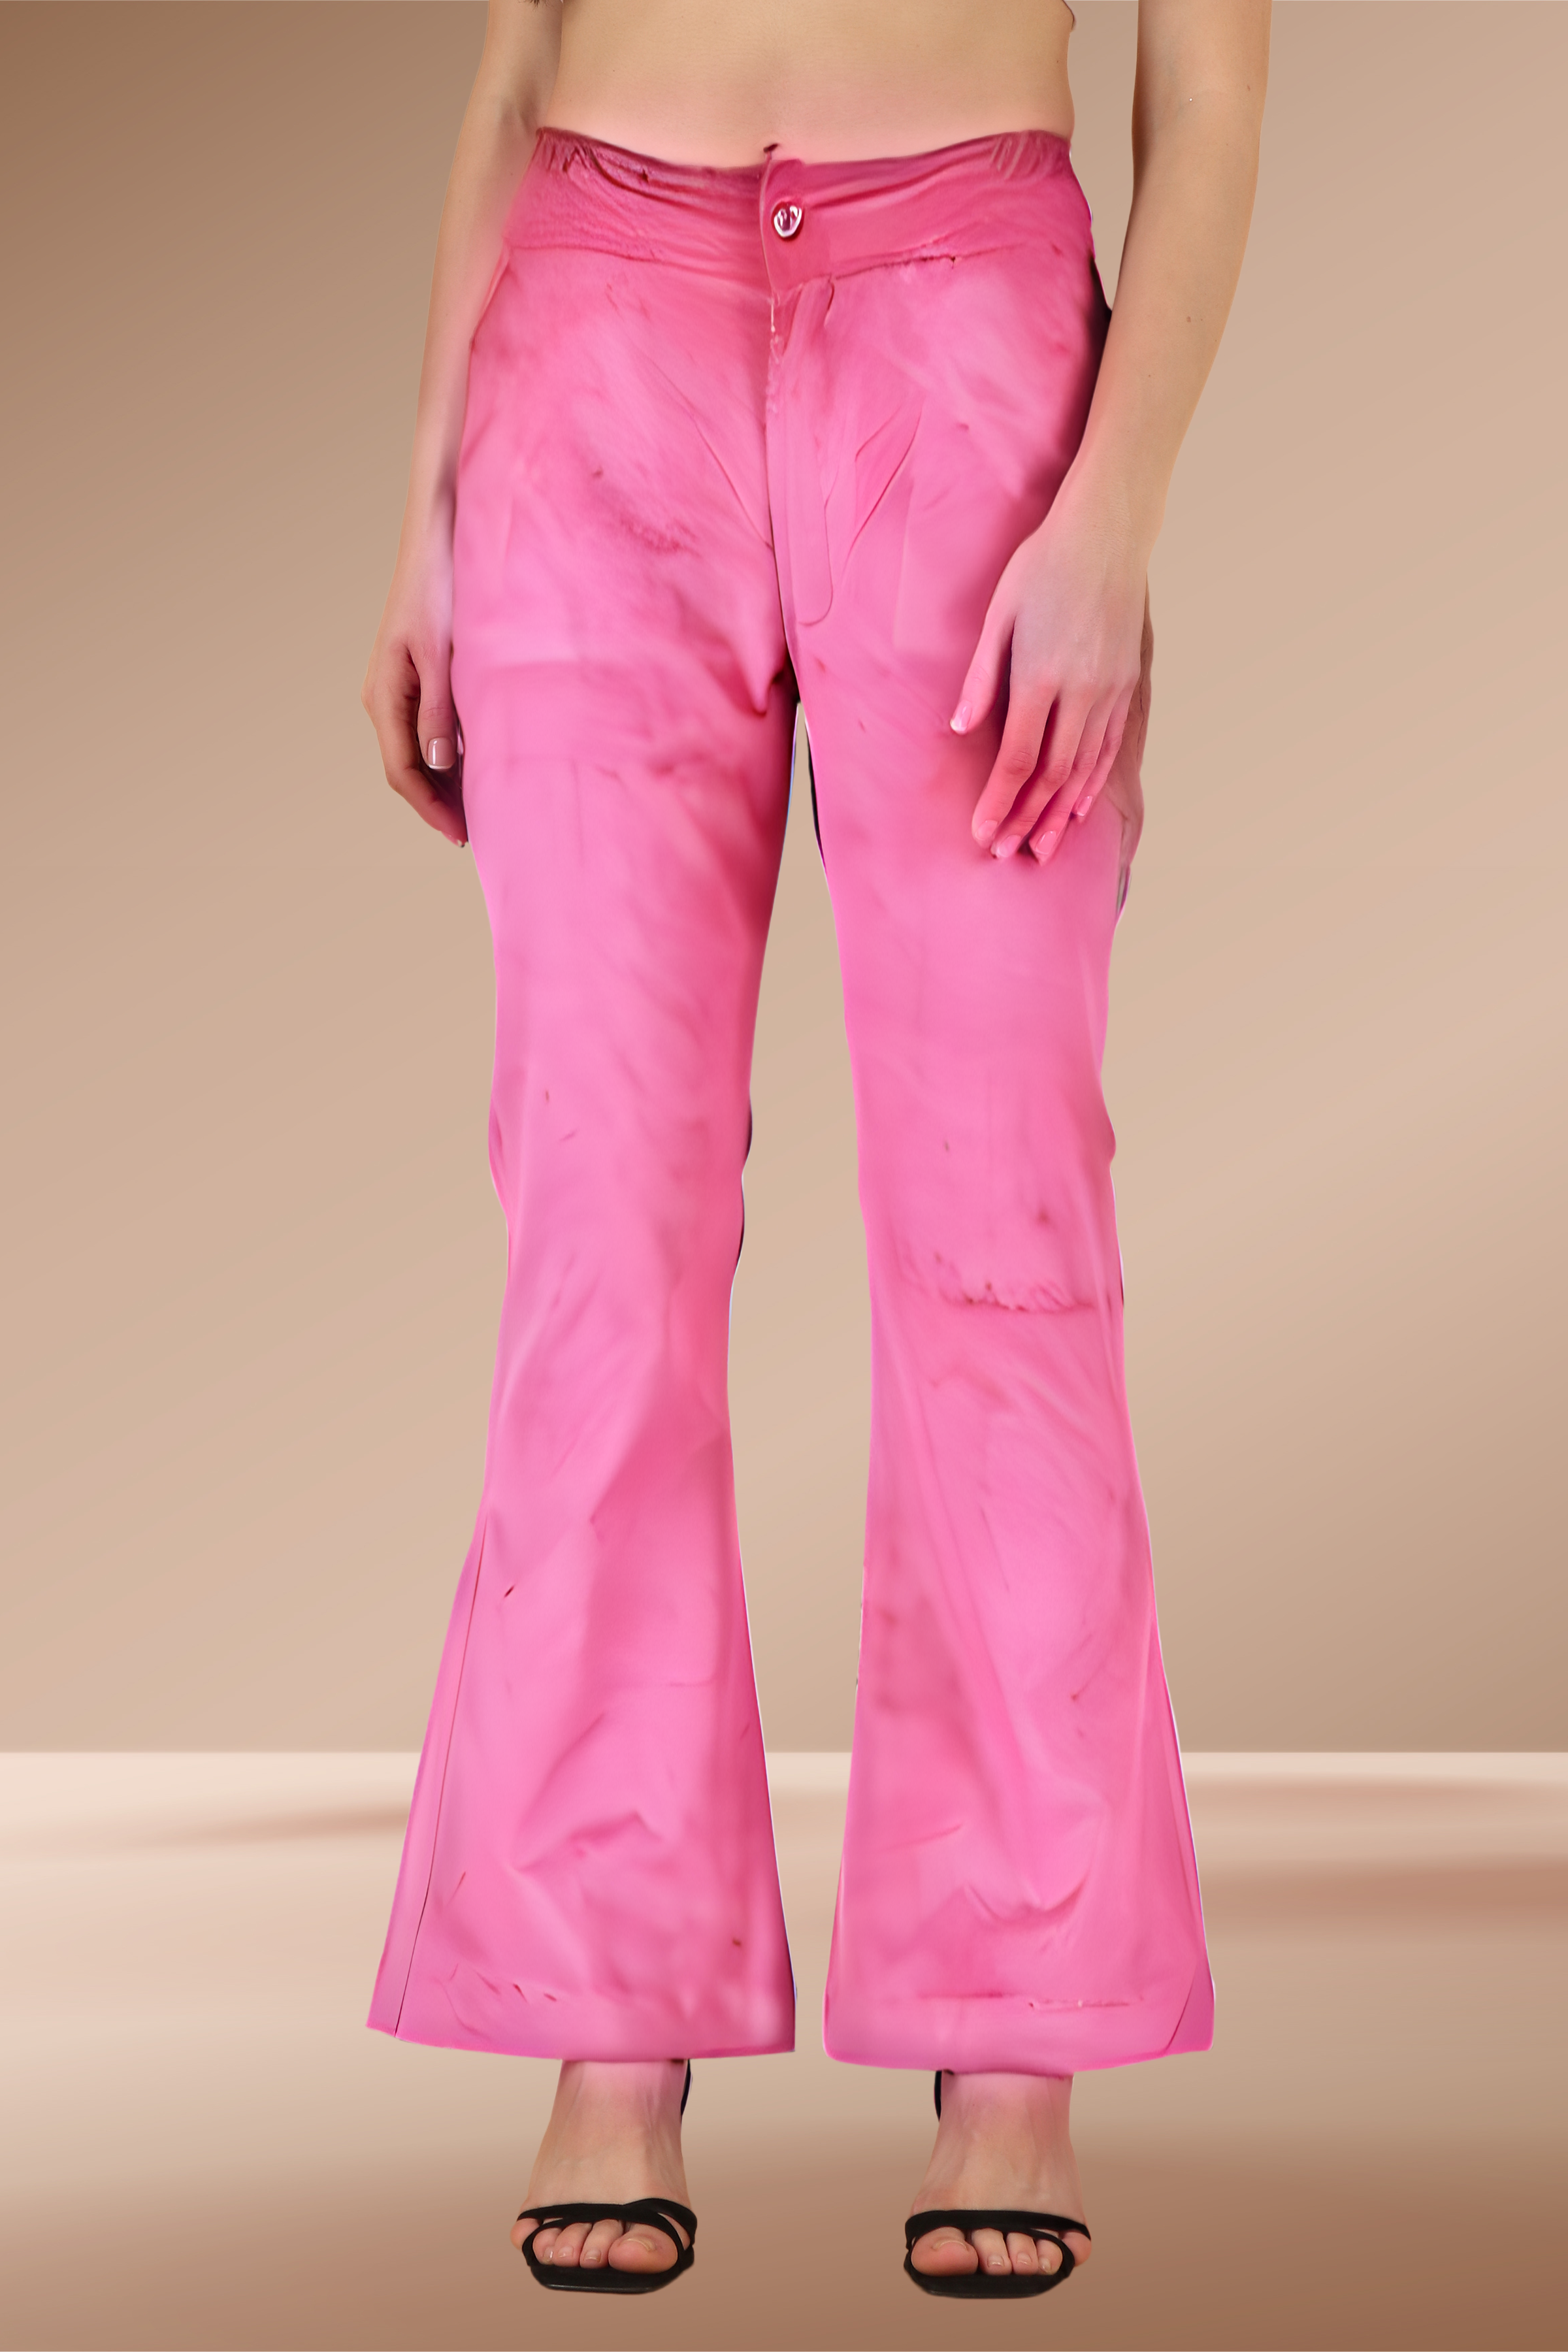 Buy Plus Size Bell Bottom Pants & Bell Bottom Pants For Women - Apella